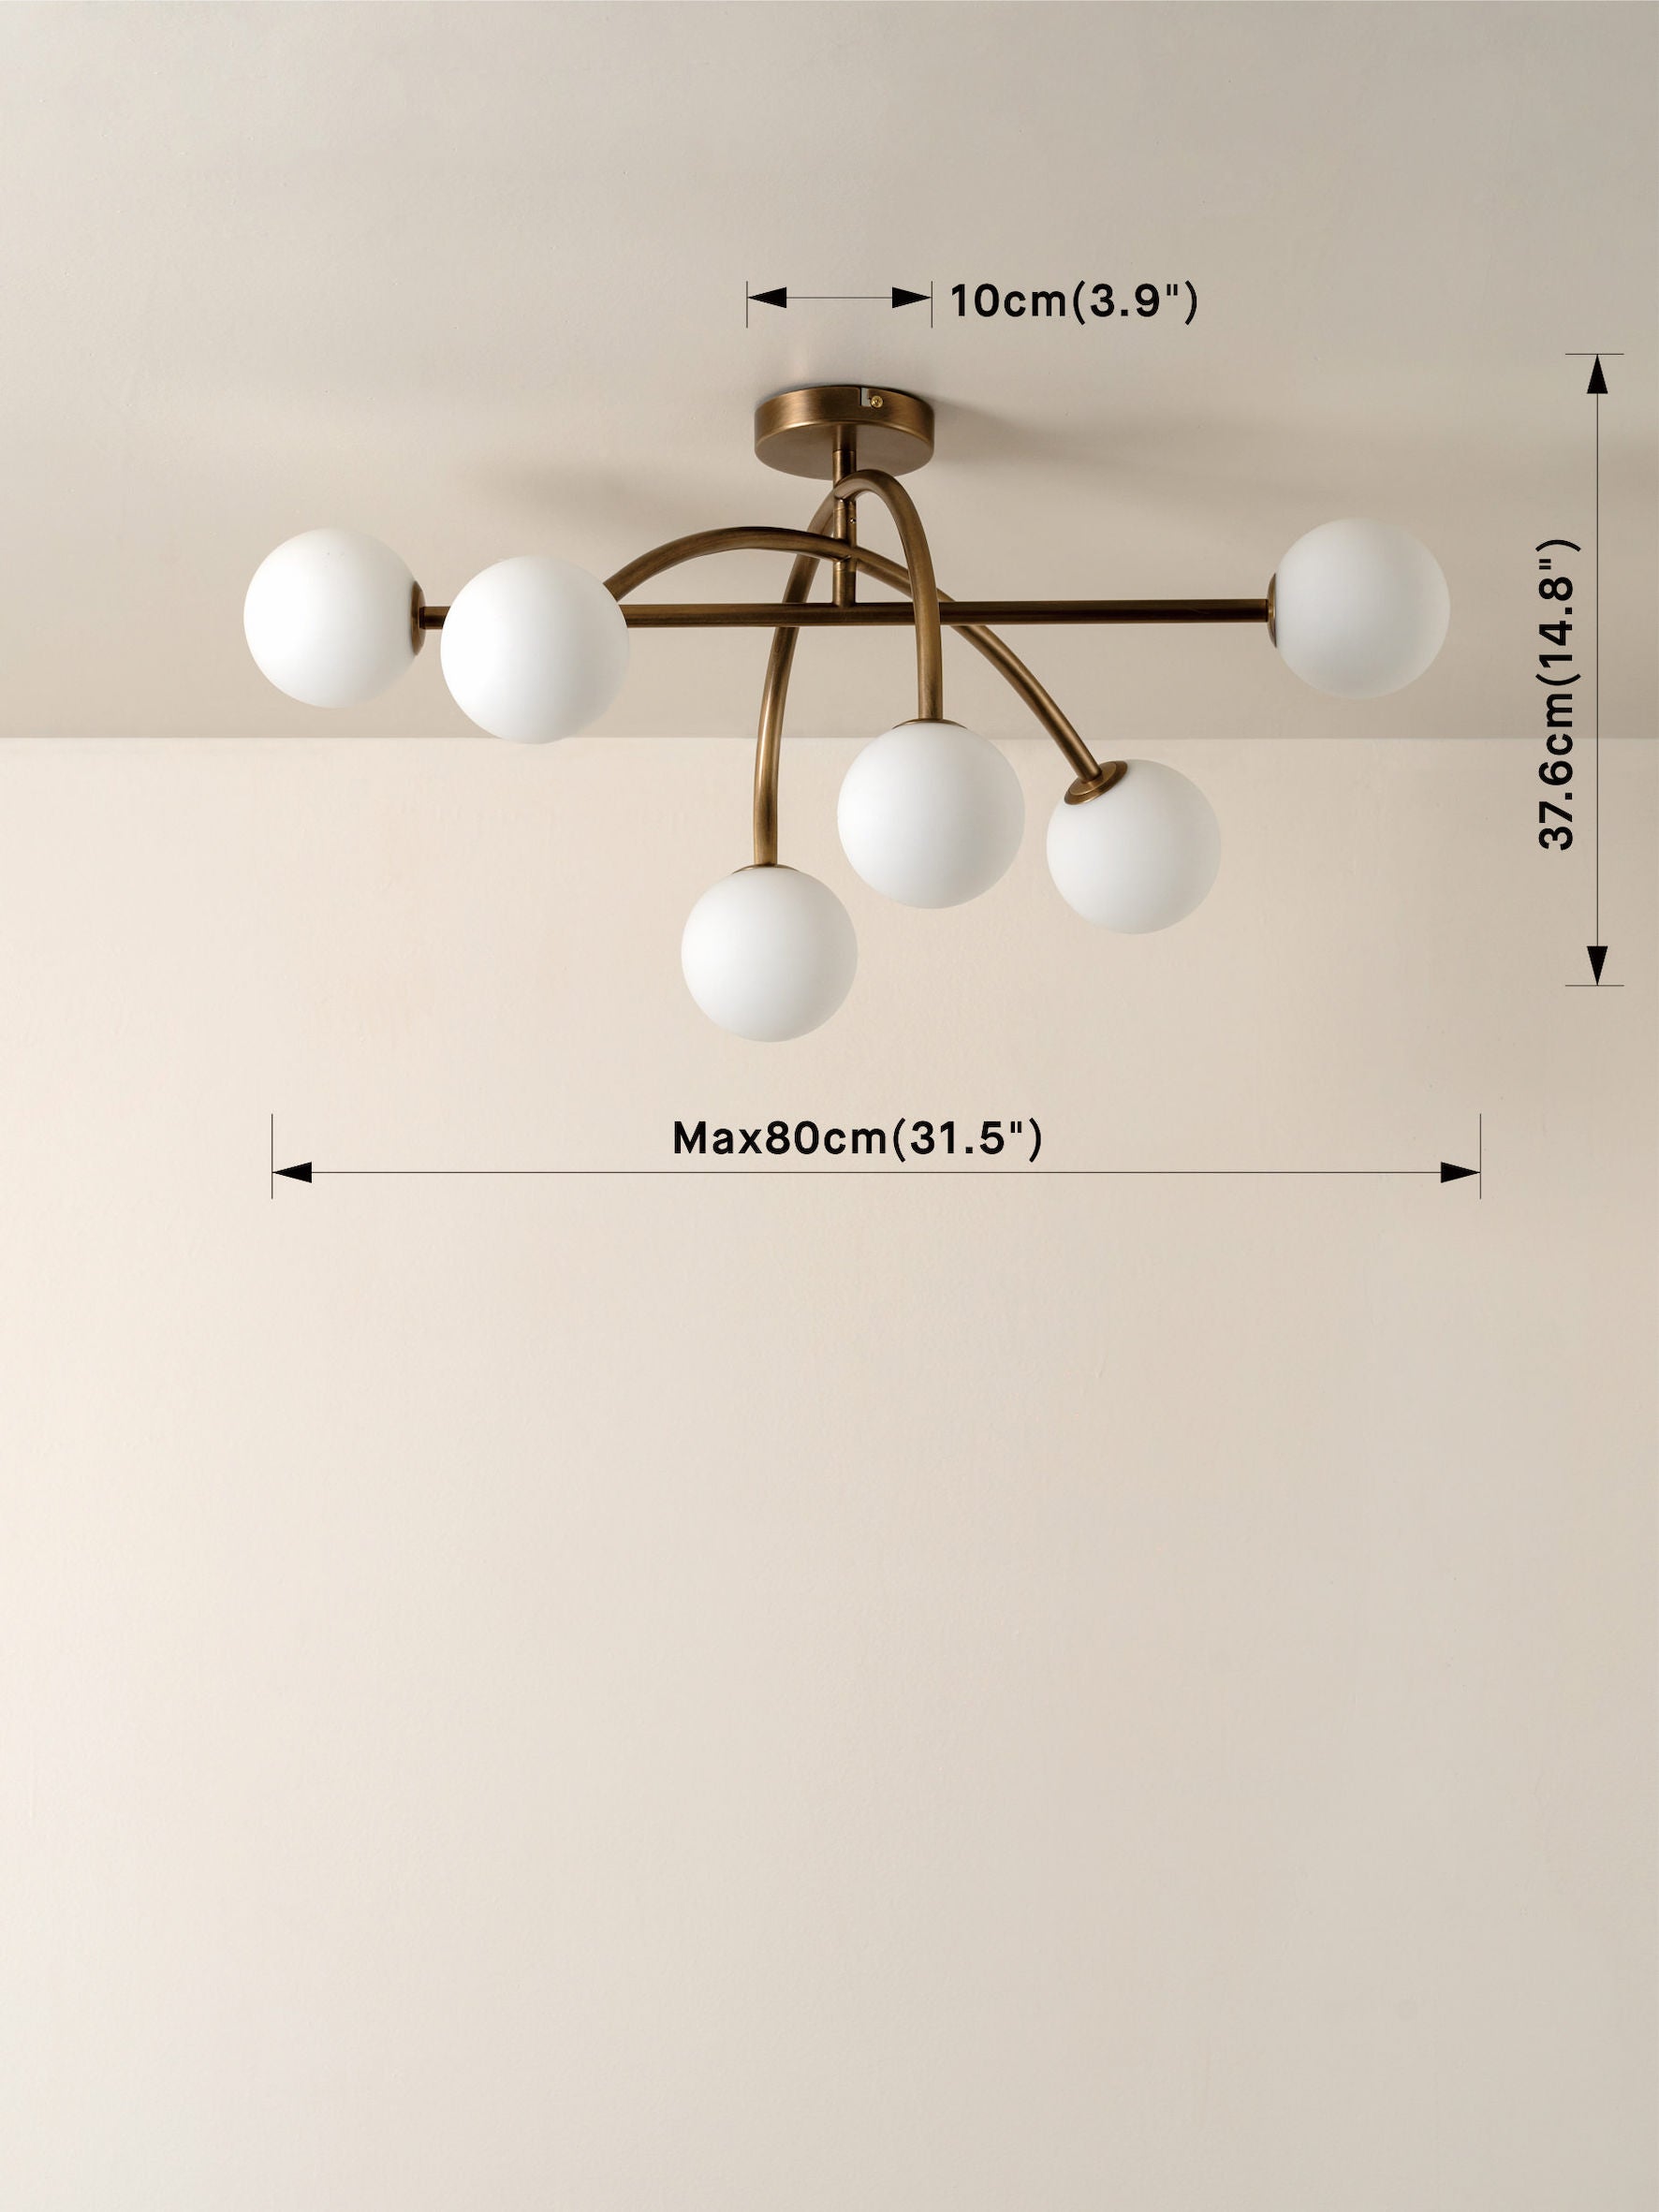 Perry - 6 light aged brass and opal flush pendant | Ceiling Light | Lights & Lamps | UK | Modern Affordable Designer Lighting